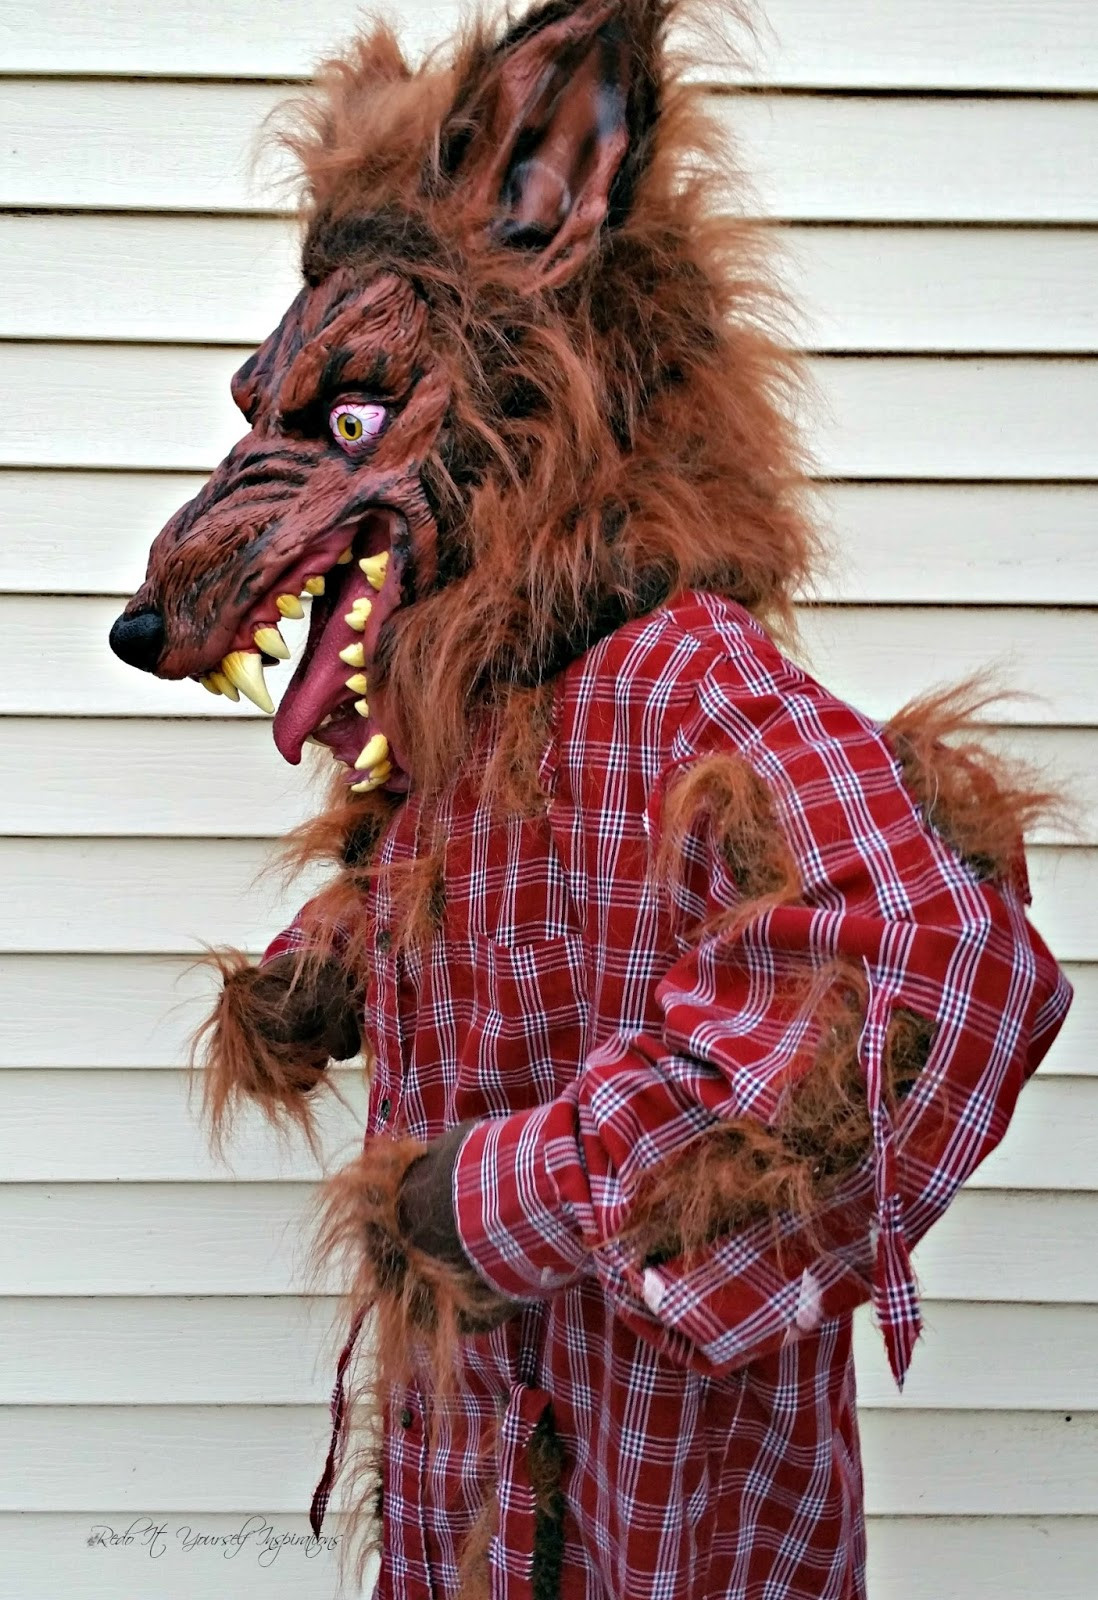 Best ideas about Werewolf Costume DIY
. Save or Pin Easy DIY Werewolf Costume Now.